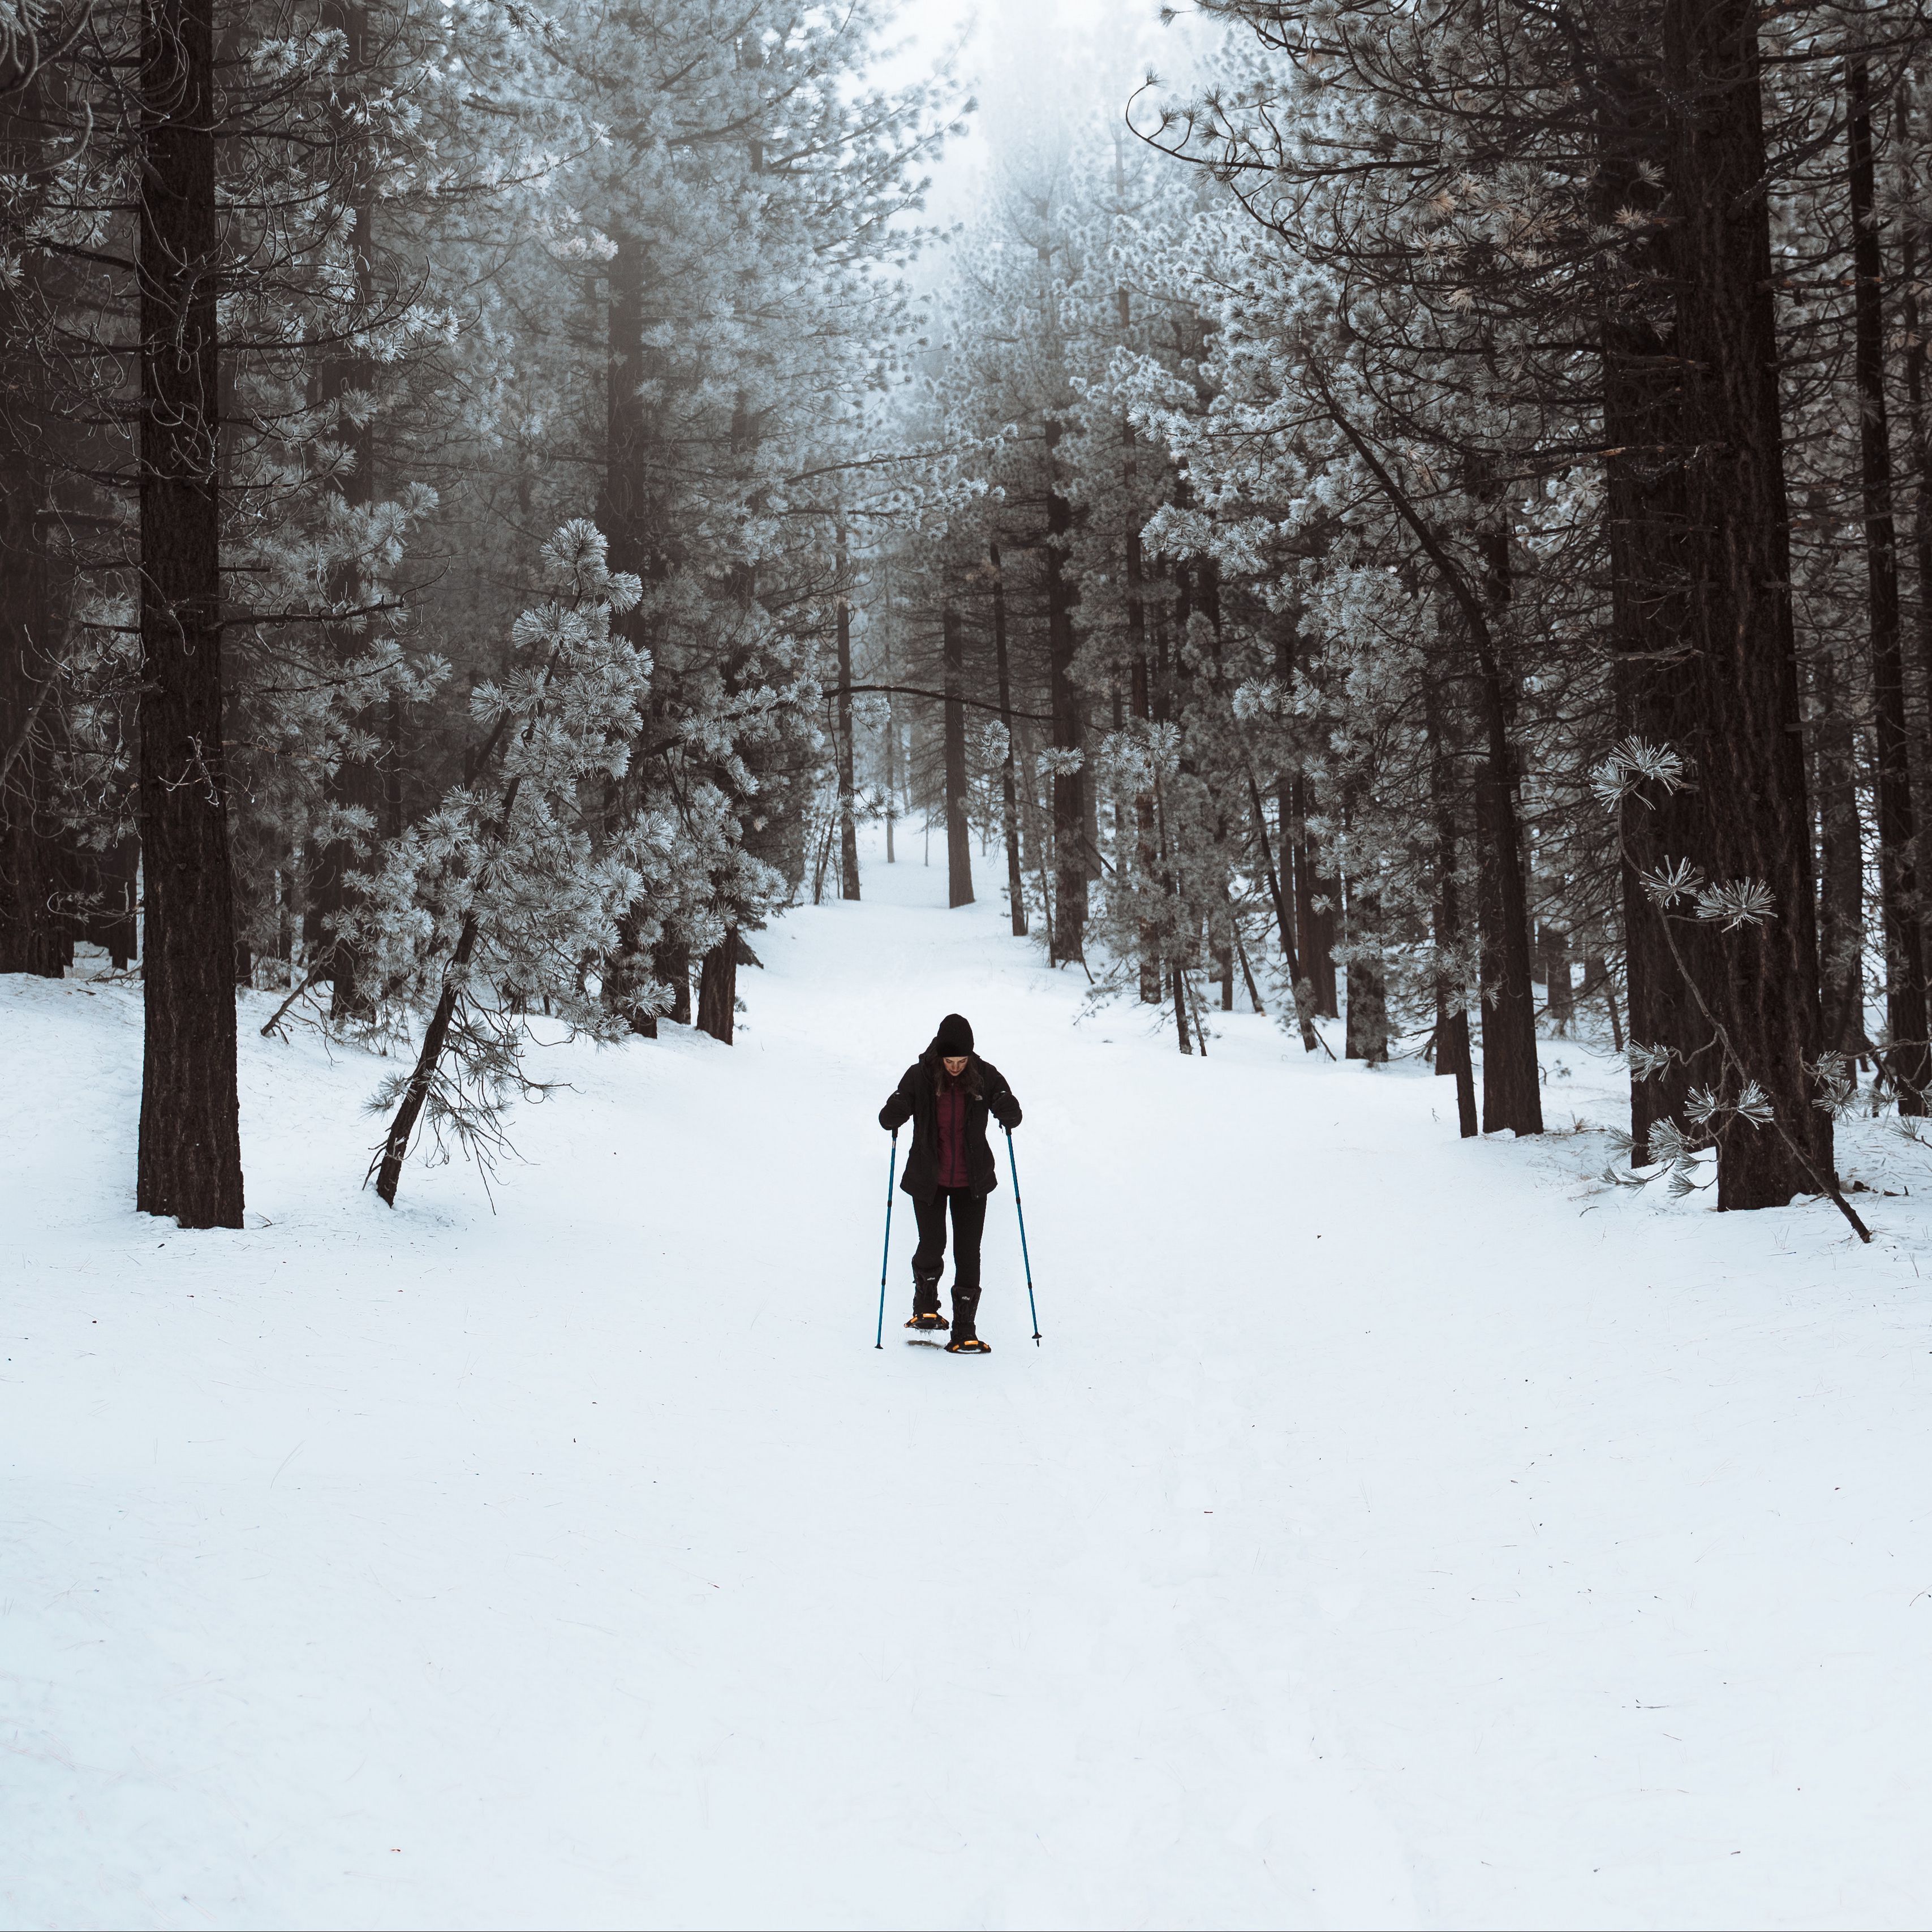 Download wallpaper 3415x3415 skier, forest, snow, winter, walk ipad pro 12.9 retina for parallax HD background